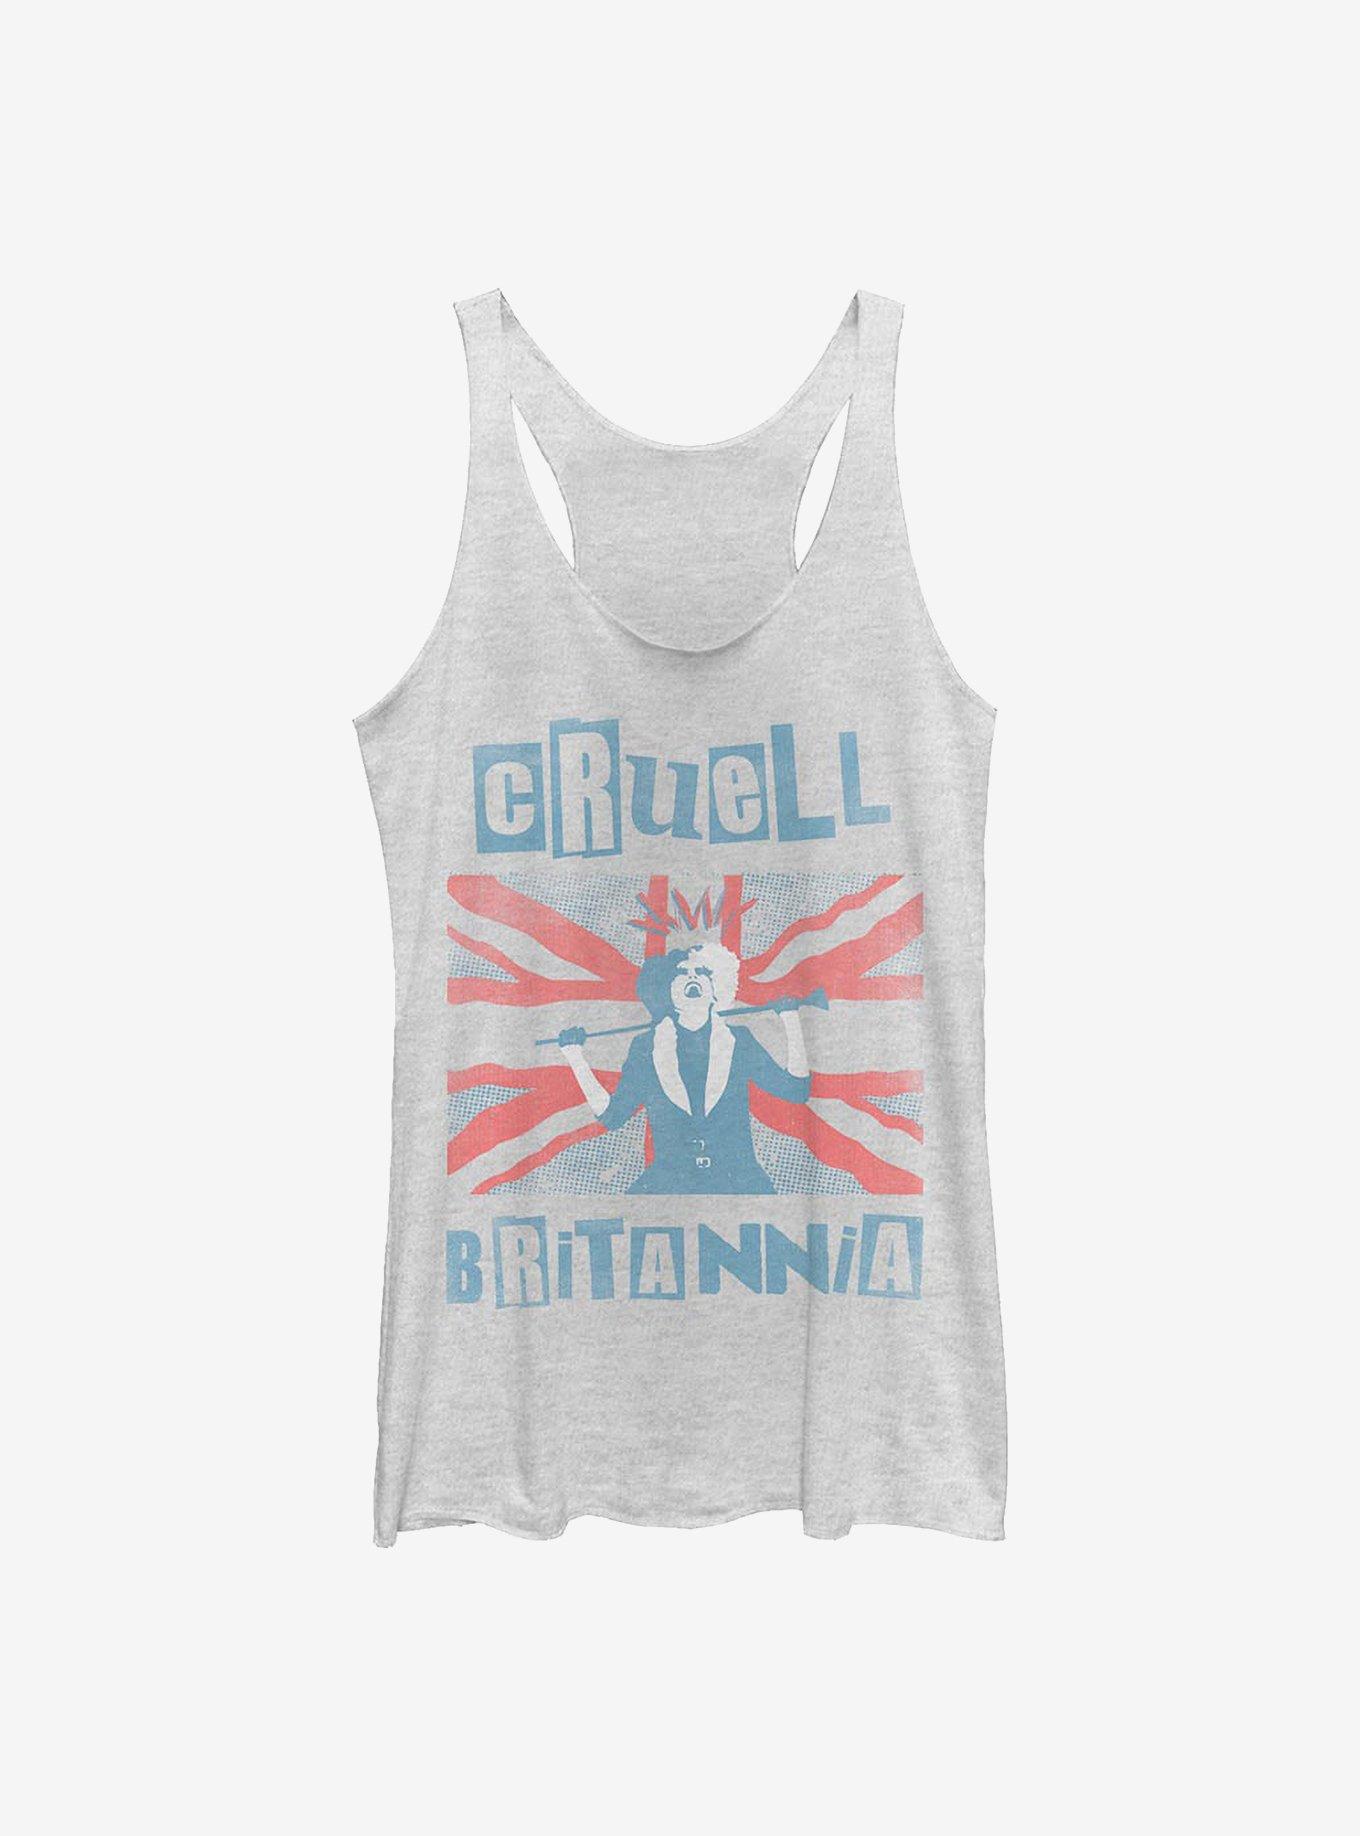 Disney Cruella Cruell Britannia Girls Tank, WHITE HTR, hi-res